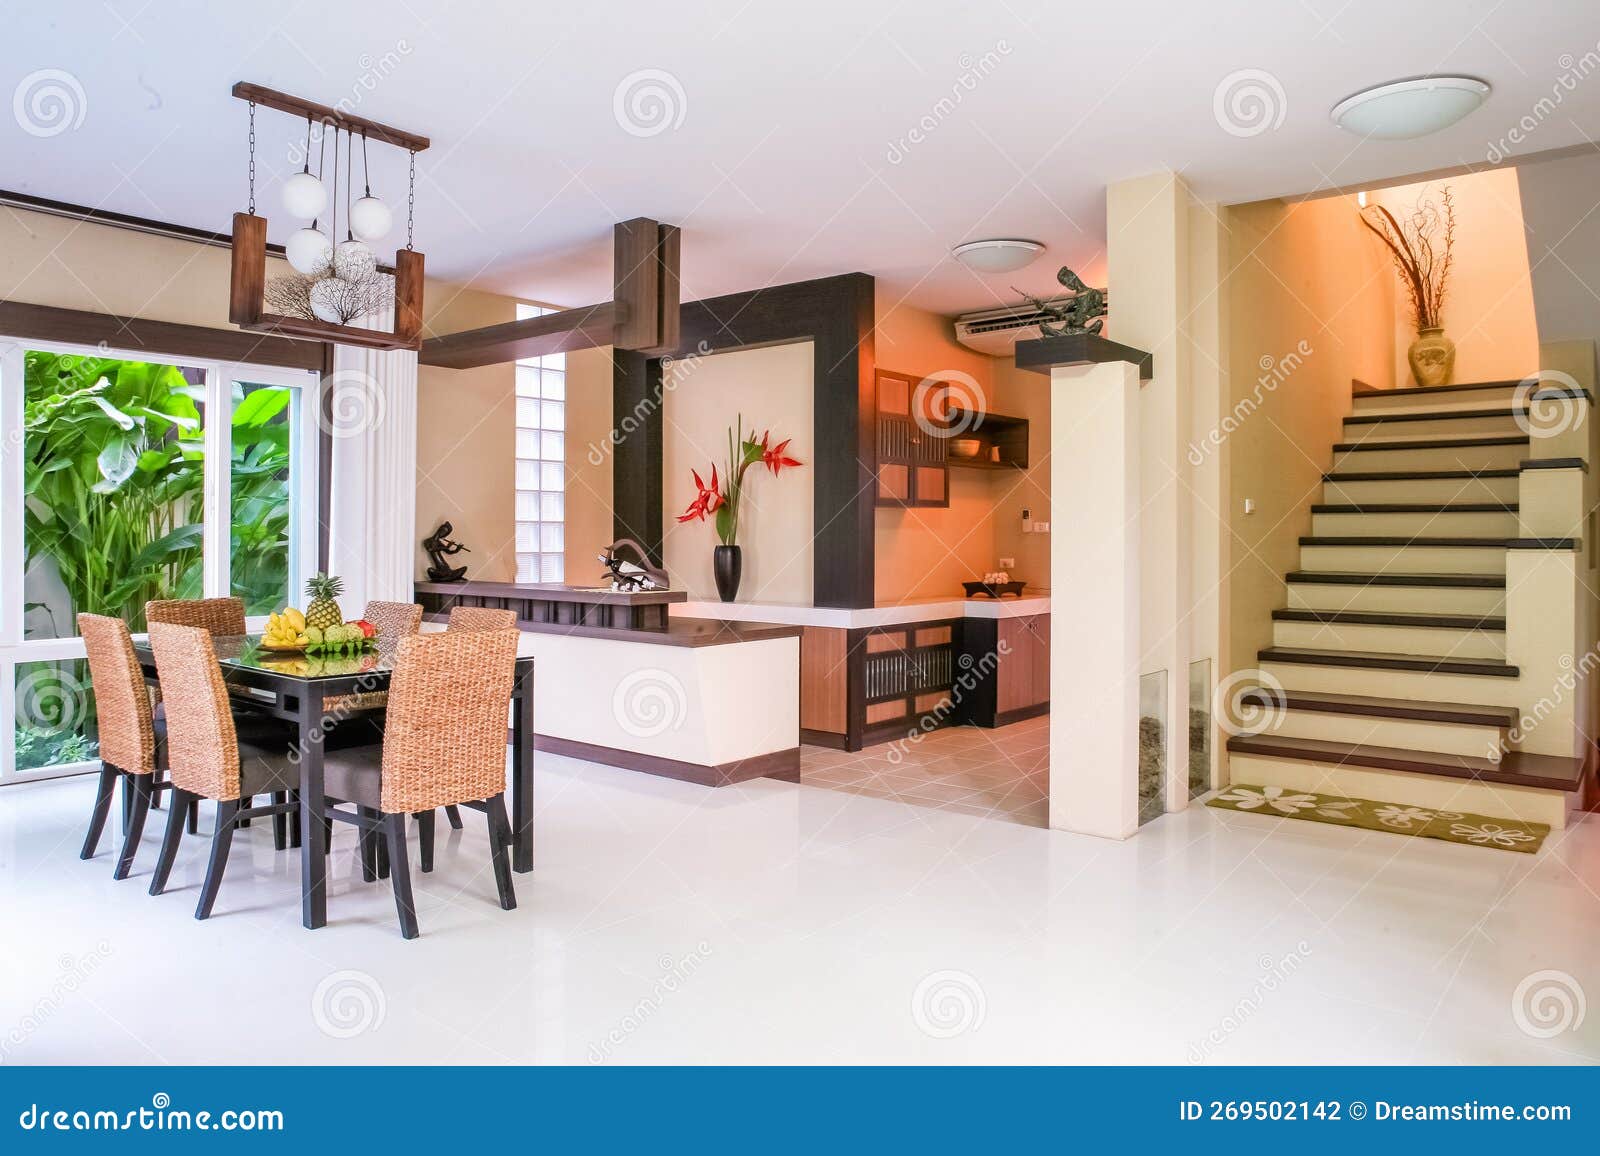 Living Room Design with Modern Sofa Fountain and Frangipani Trees ...